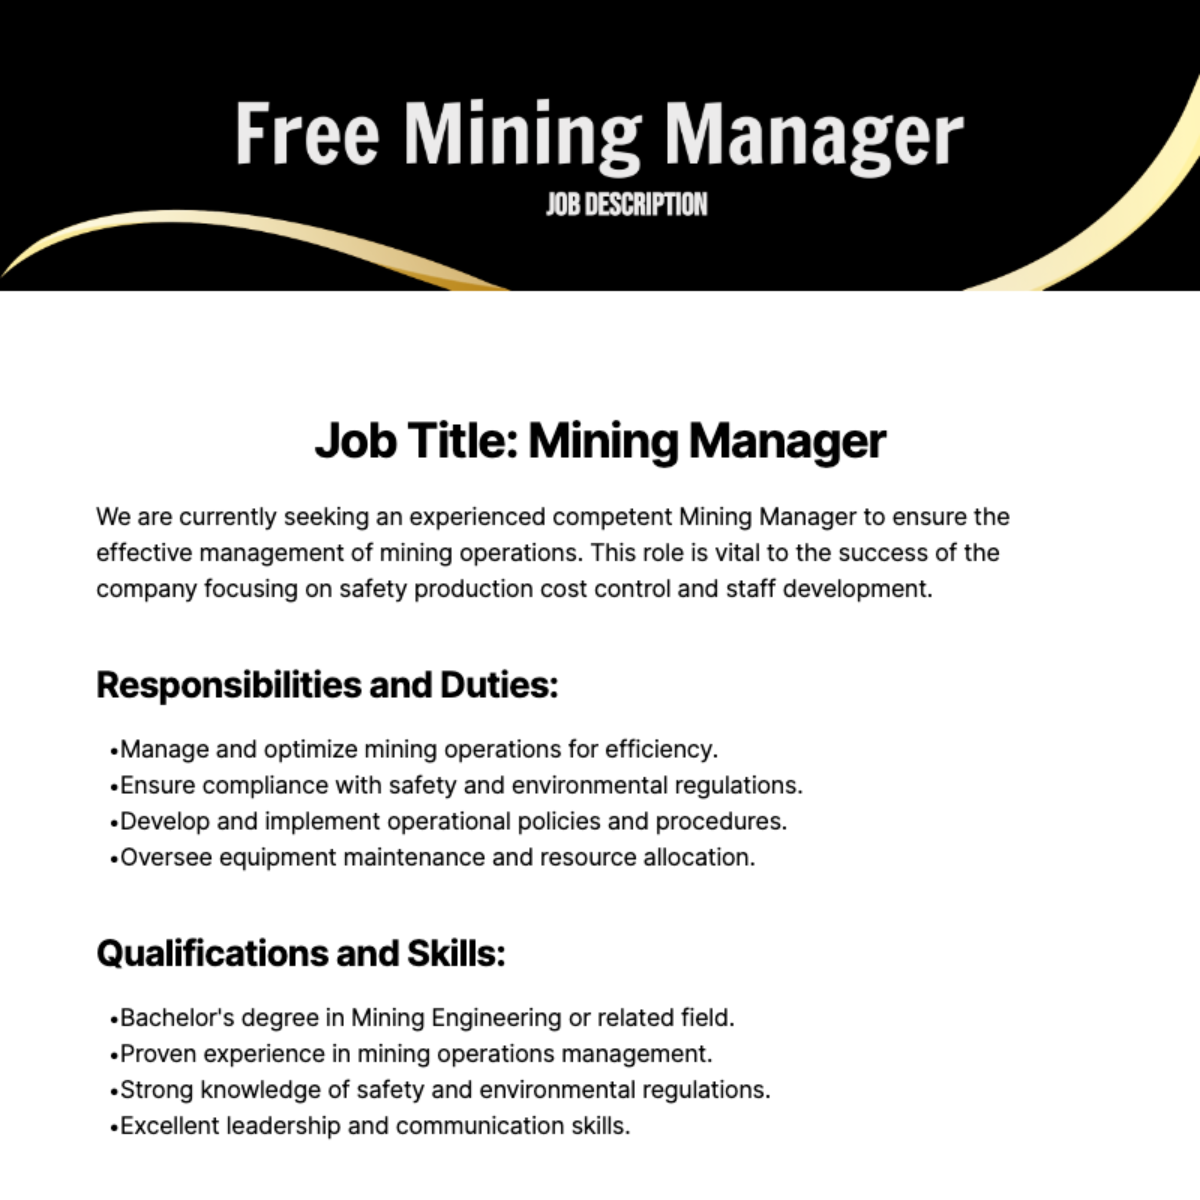 Free Mining Manager Job Description Template